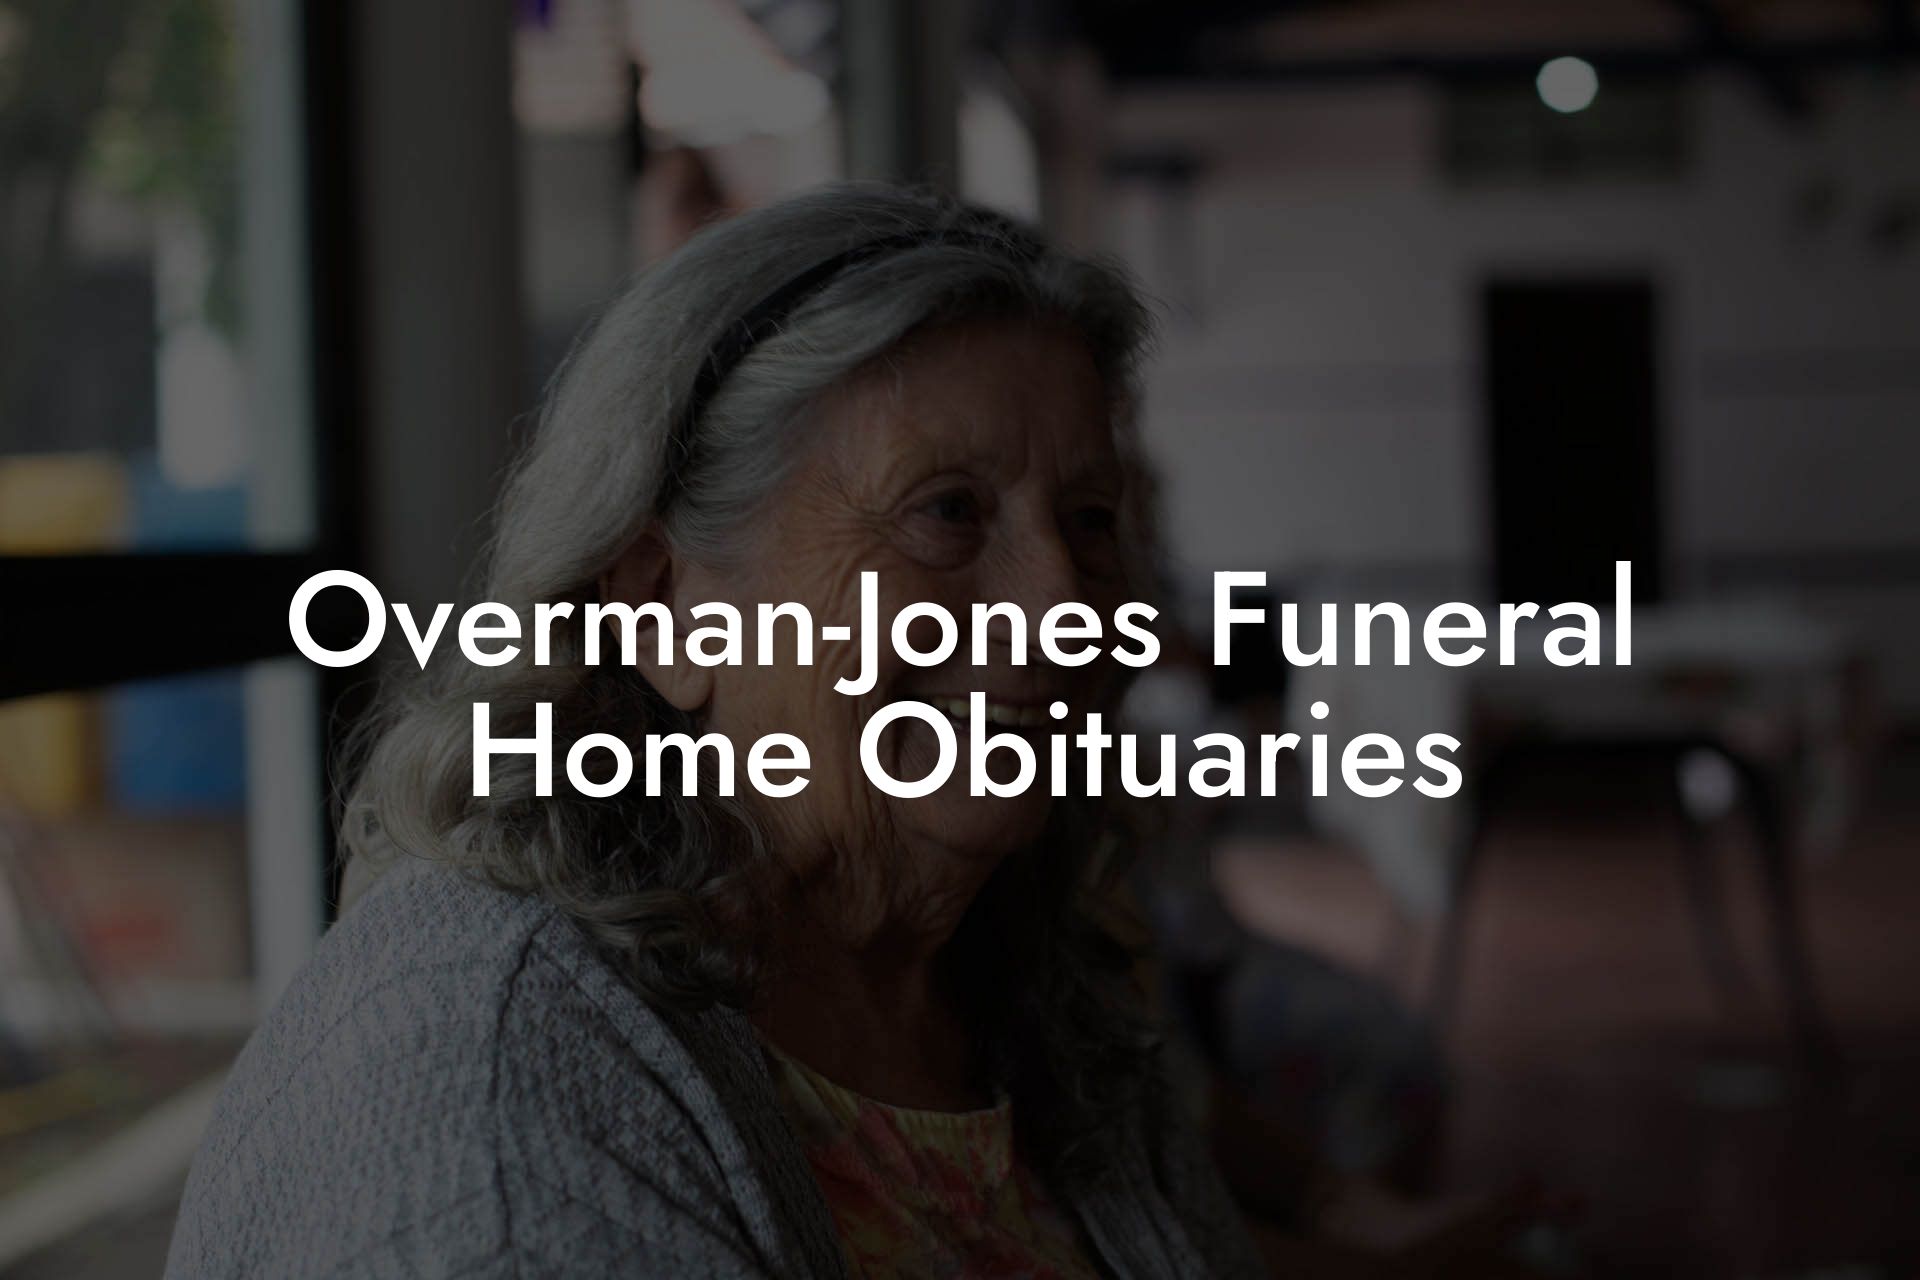 Overman-Jones Funeral Home Obituaries